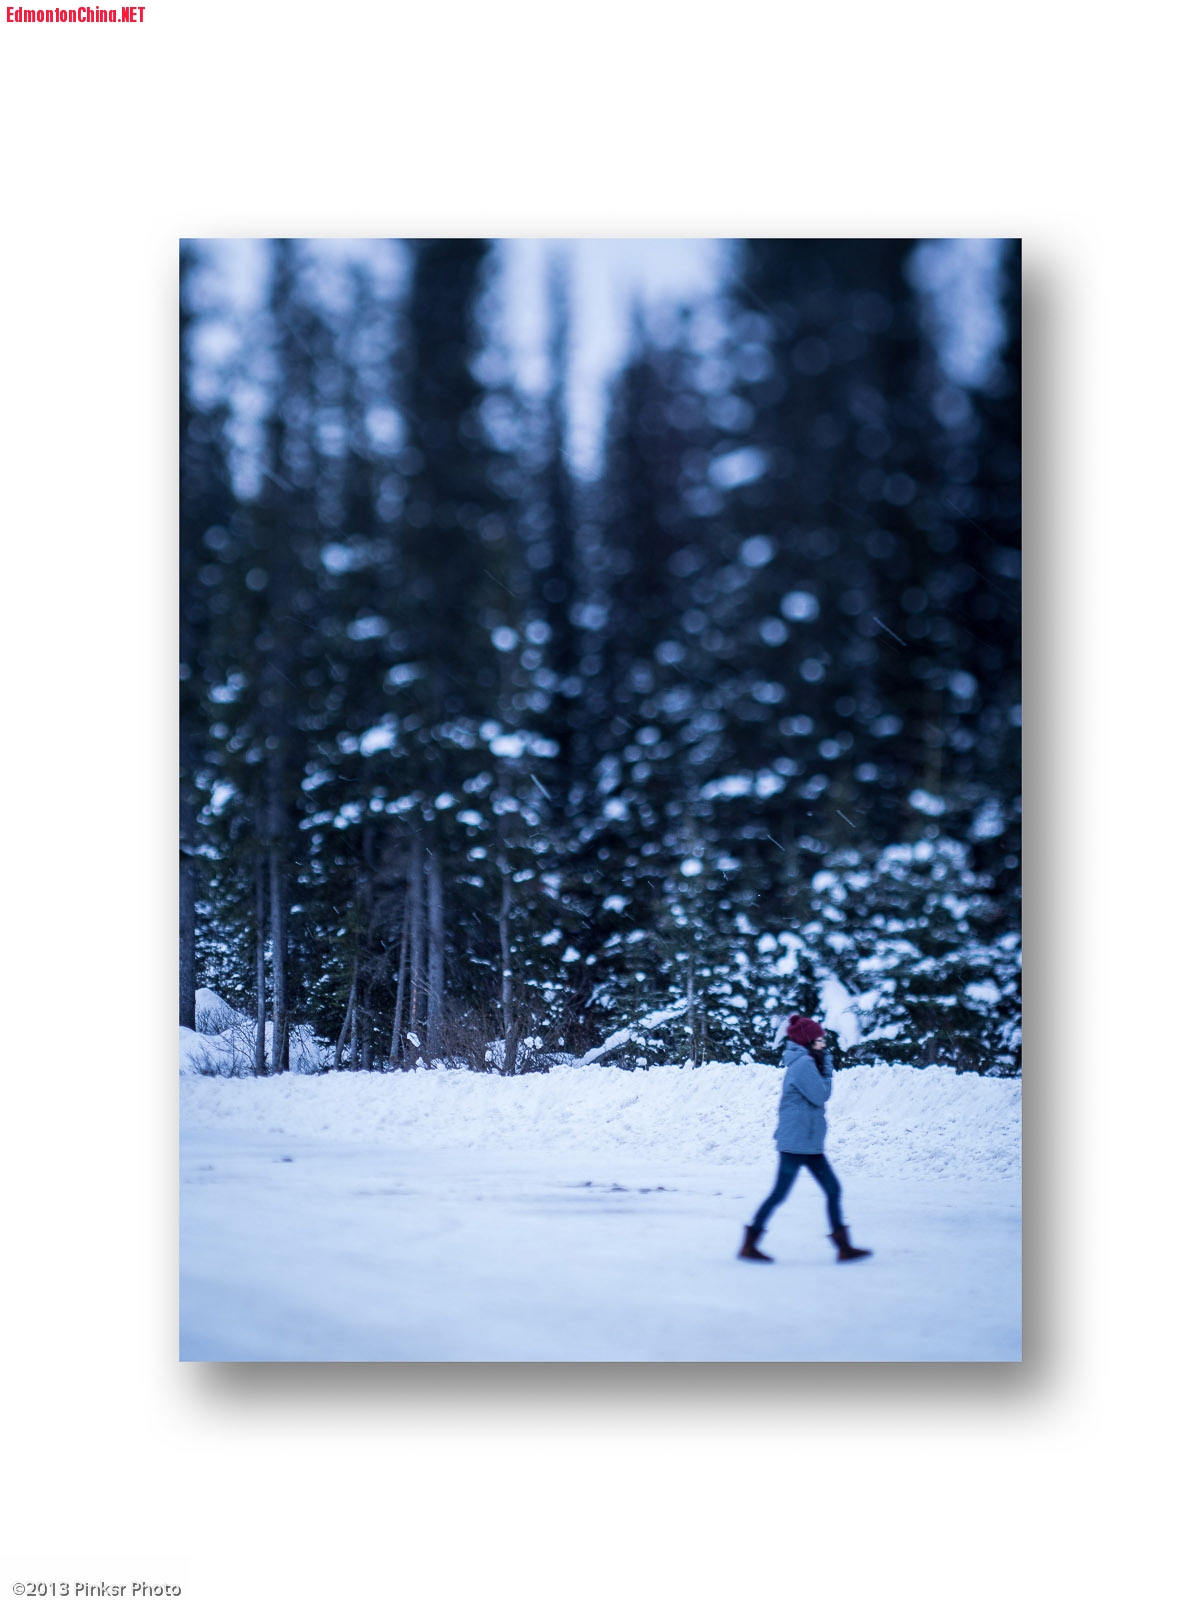 Banff in Winter-11.jpg